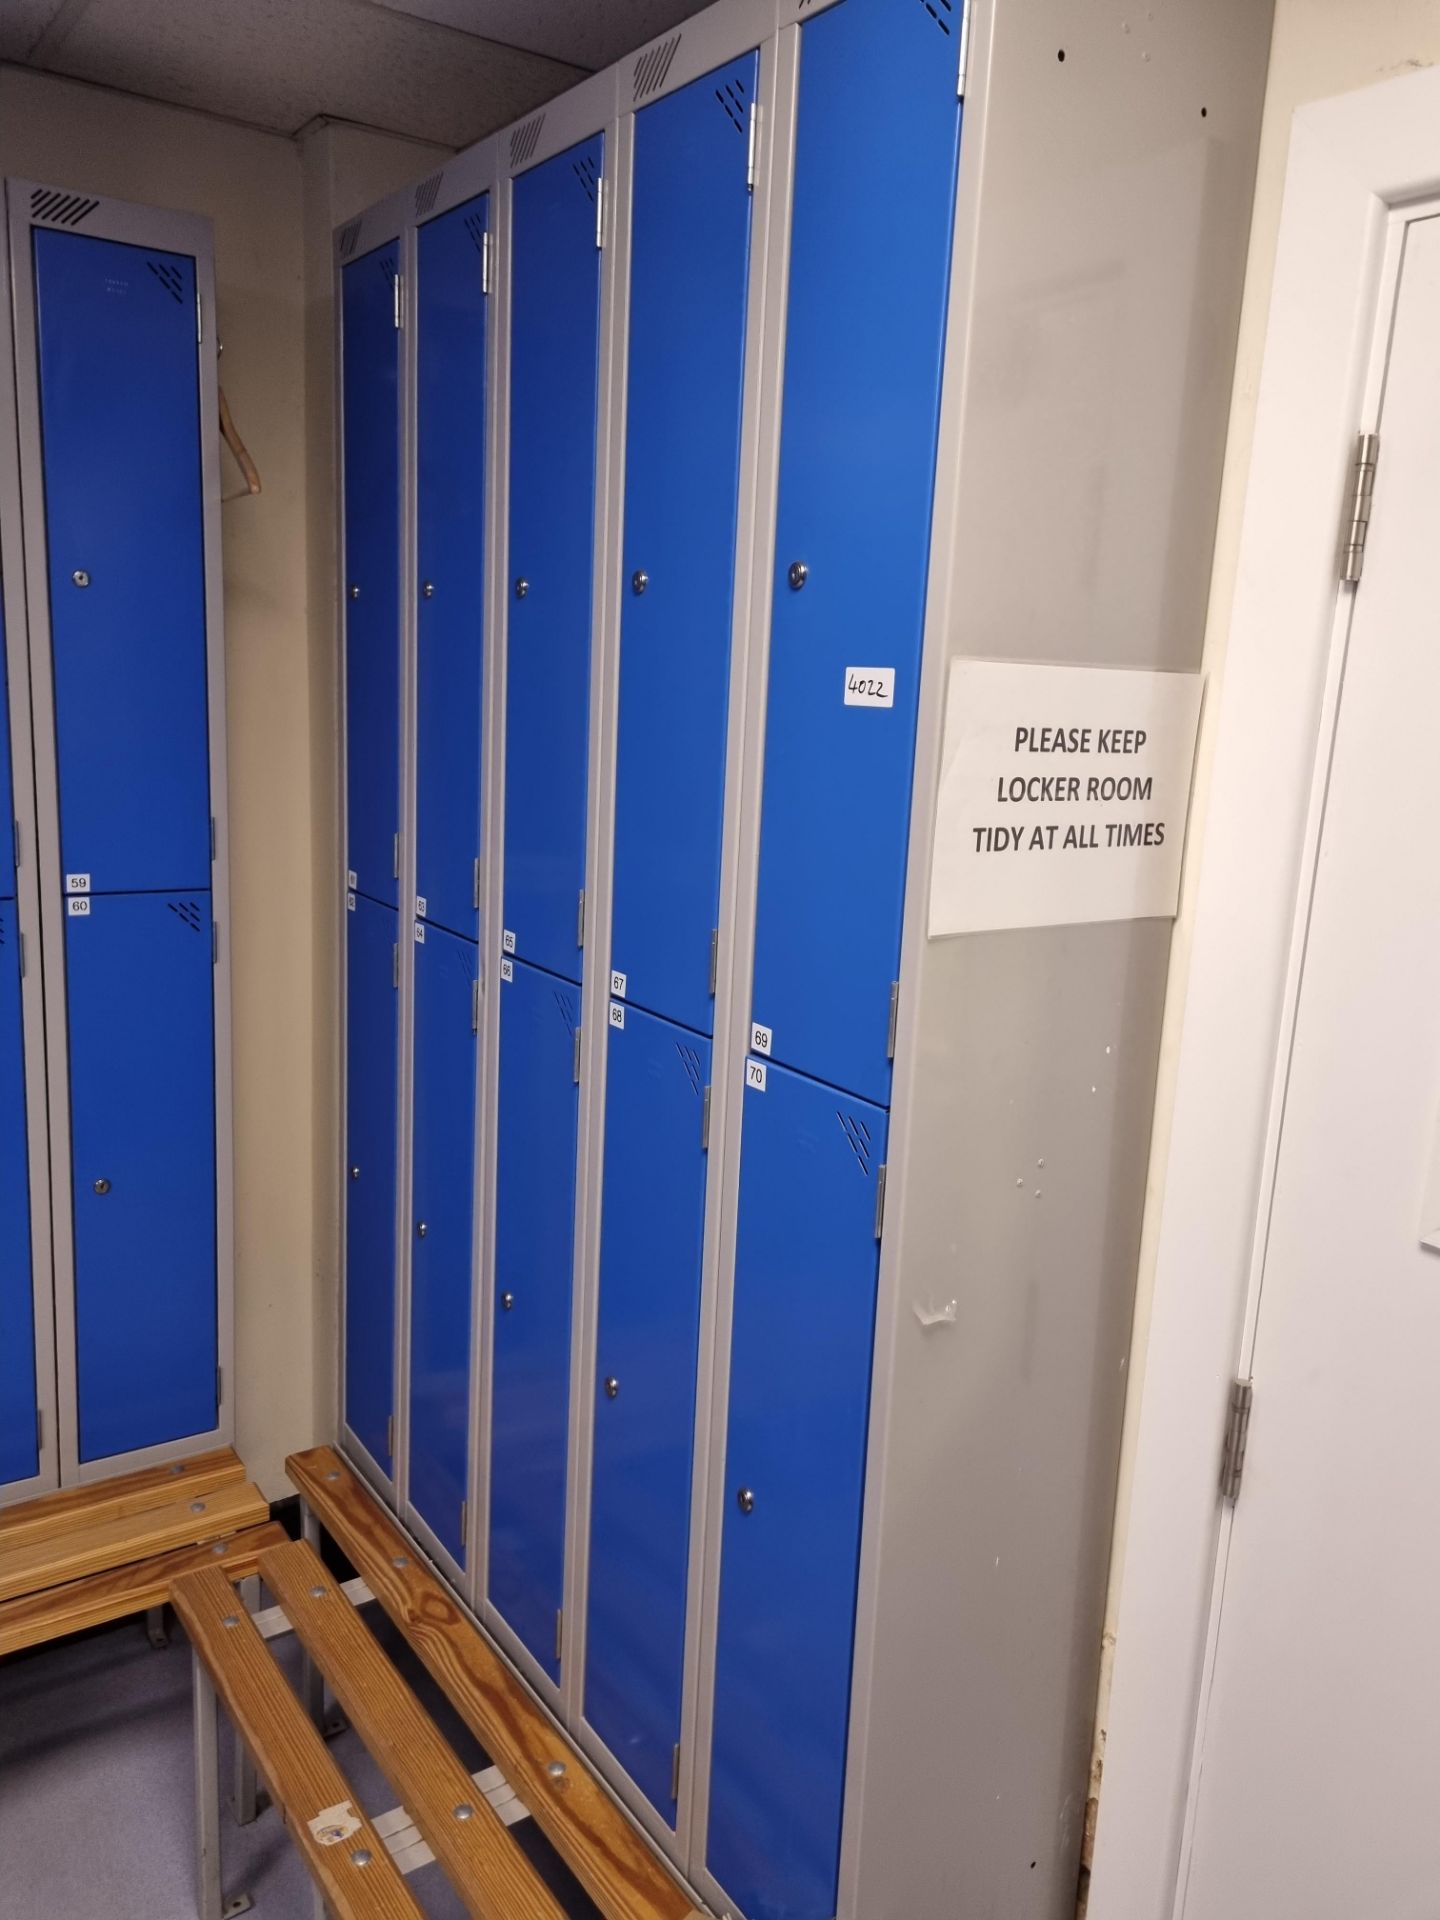 70x Sperrin Metal Personnel Lockers Powder Coated each locker is 200x850x300 deep With Runs Of - Image 2 of 3